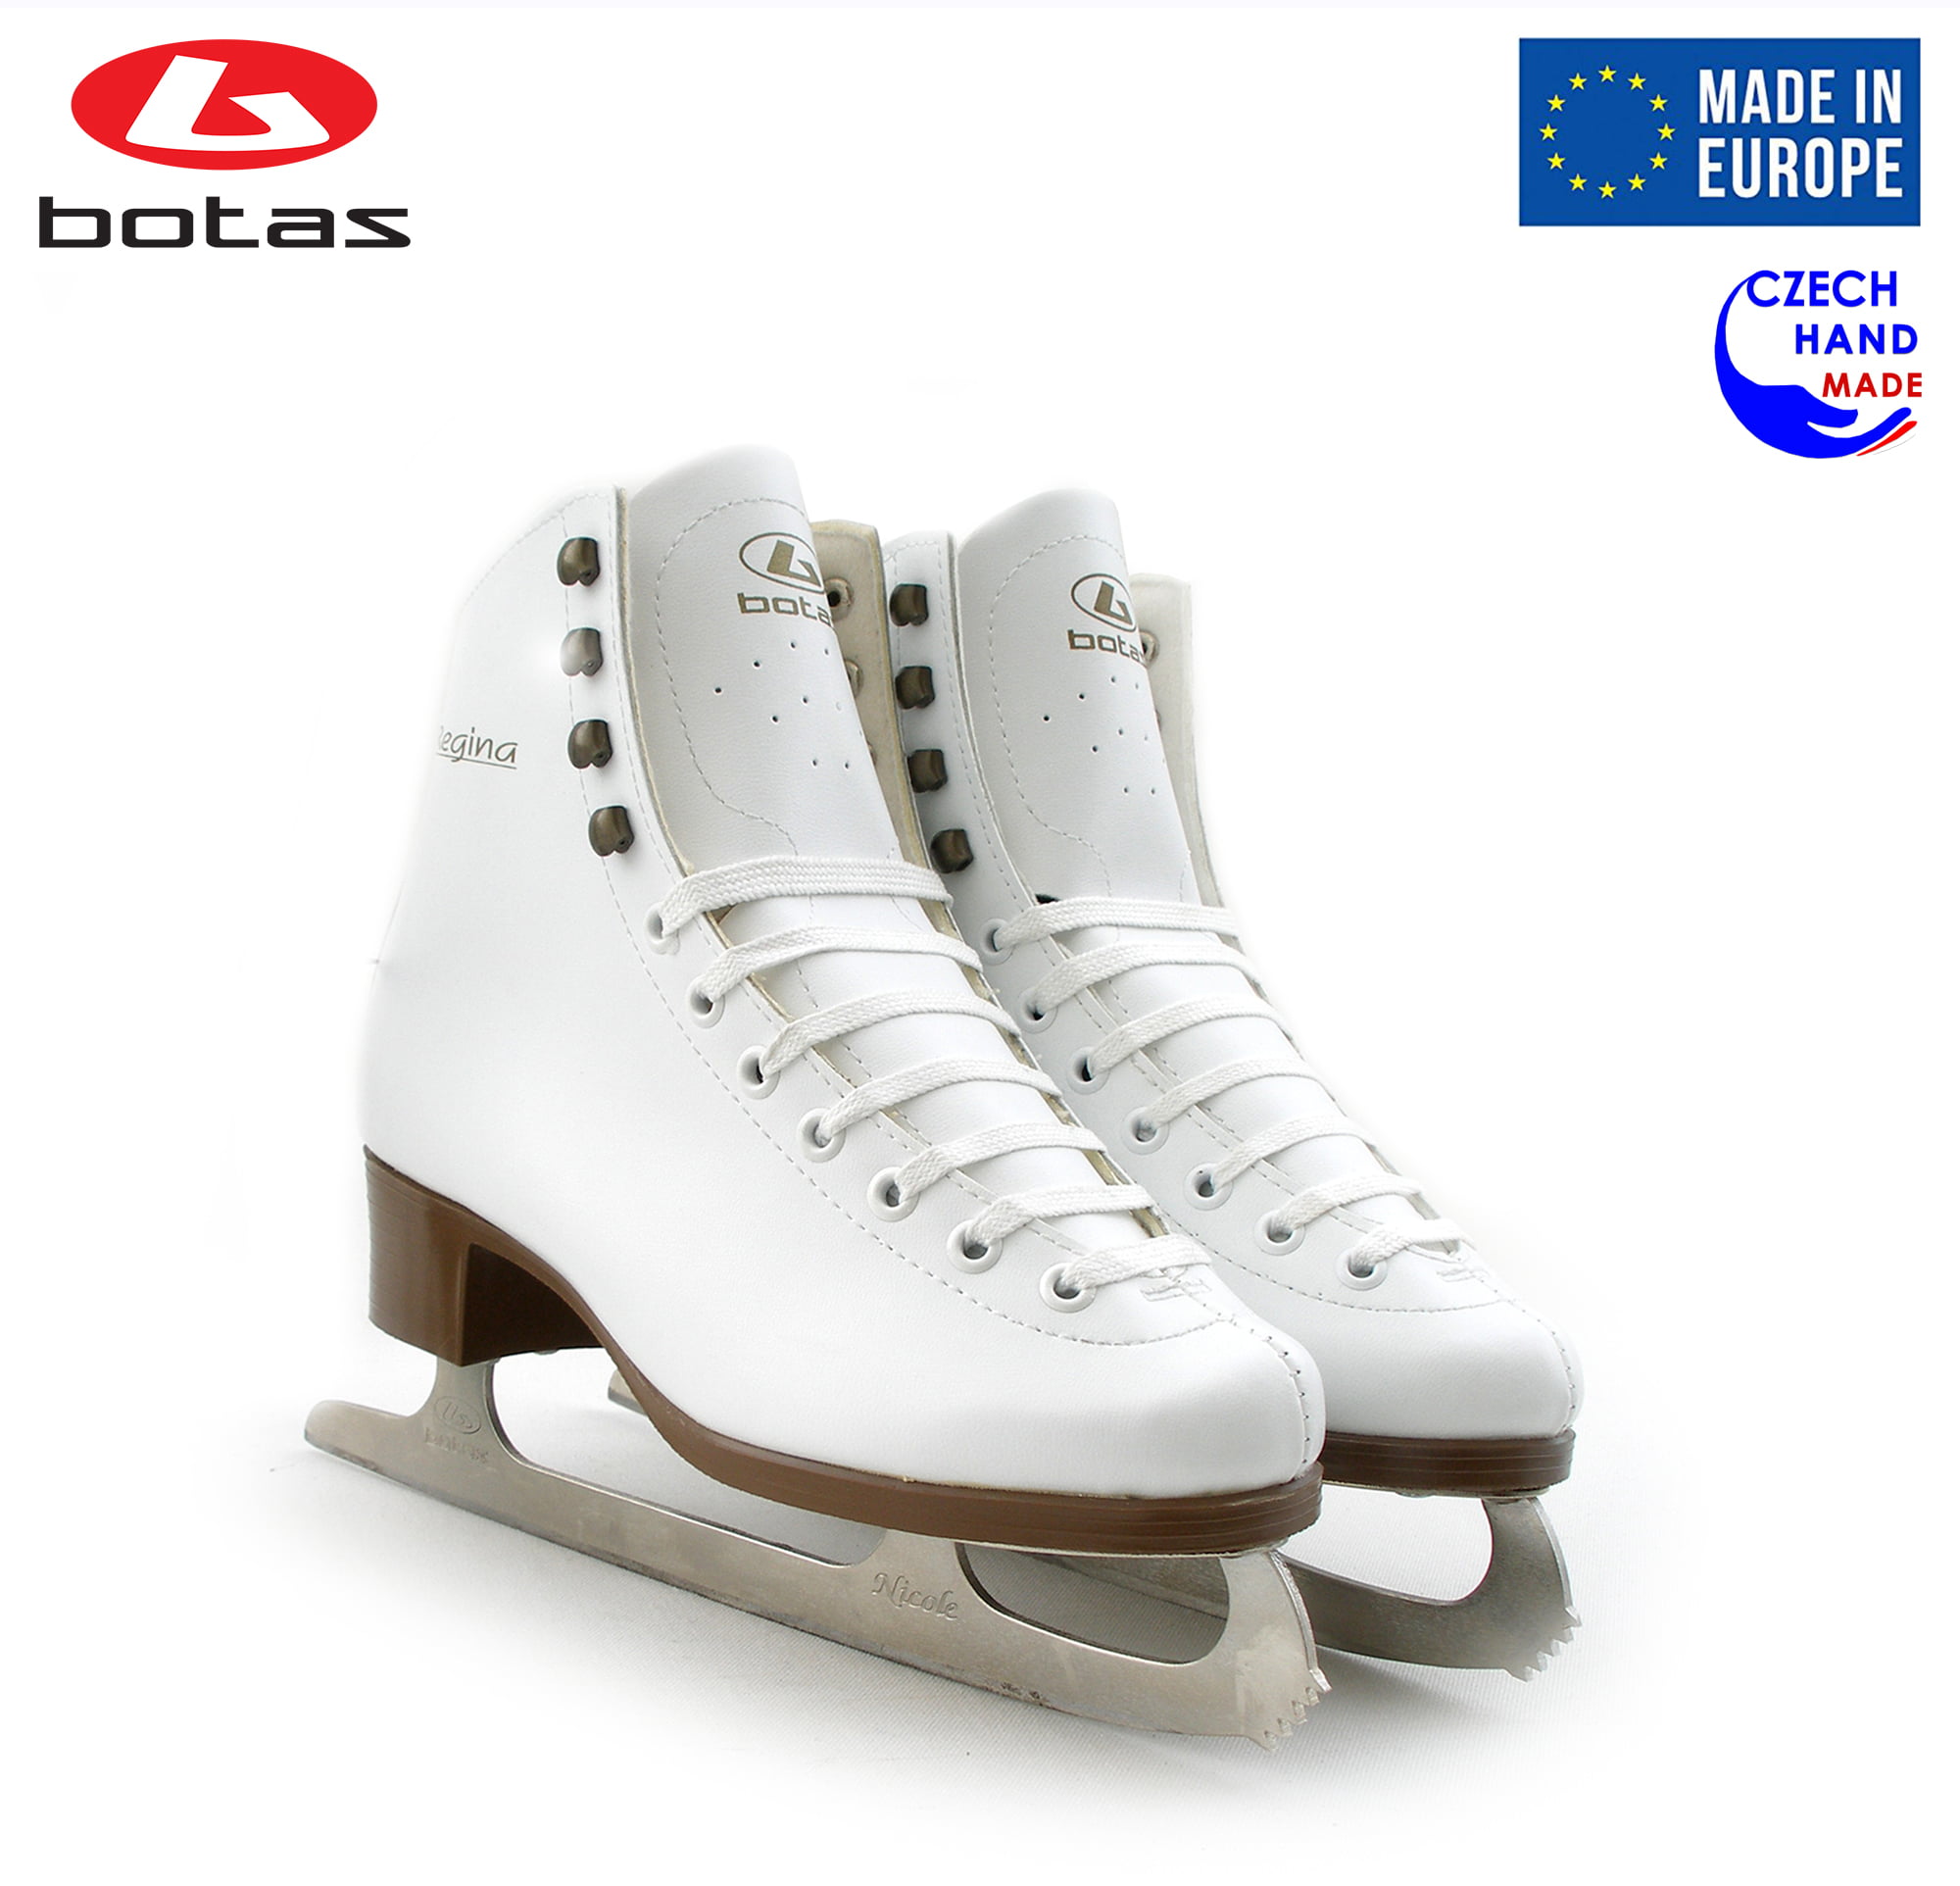 Czech Republic Regina Handmade in Europe Botas Womens White Ice Skates 